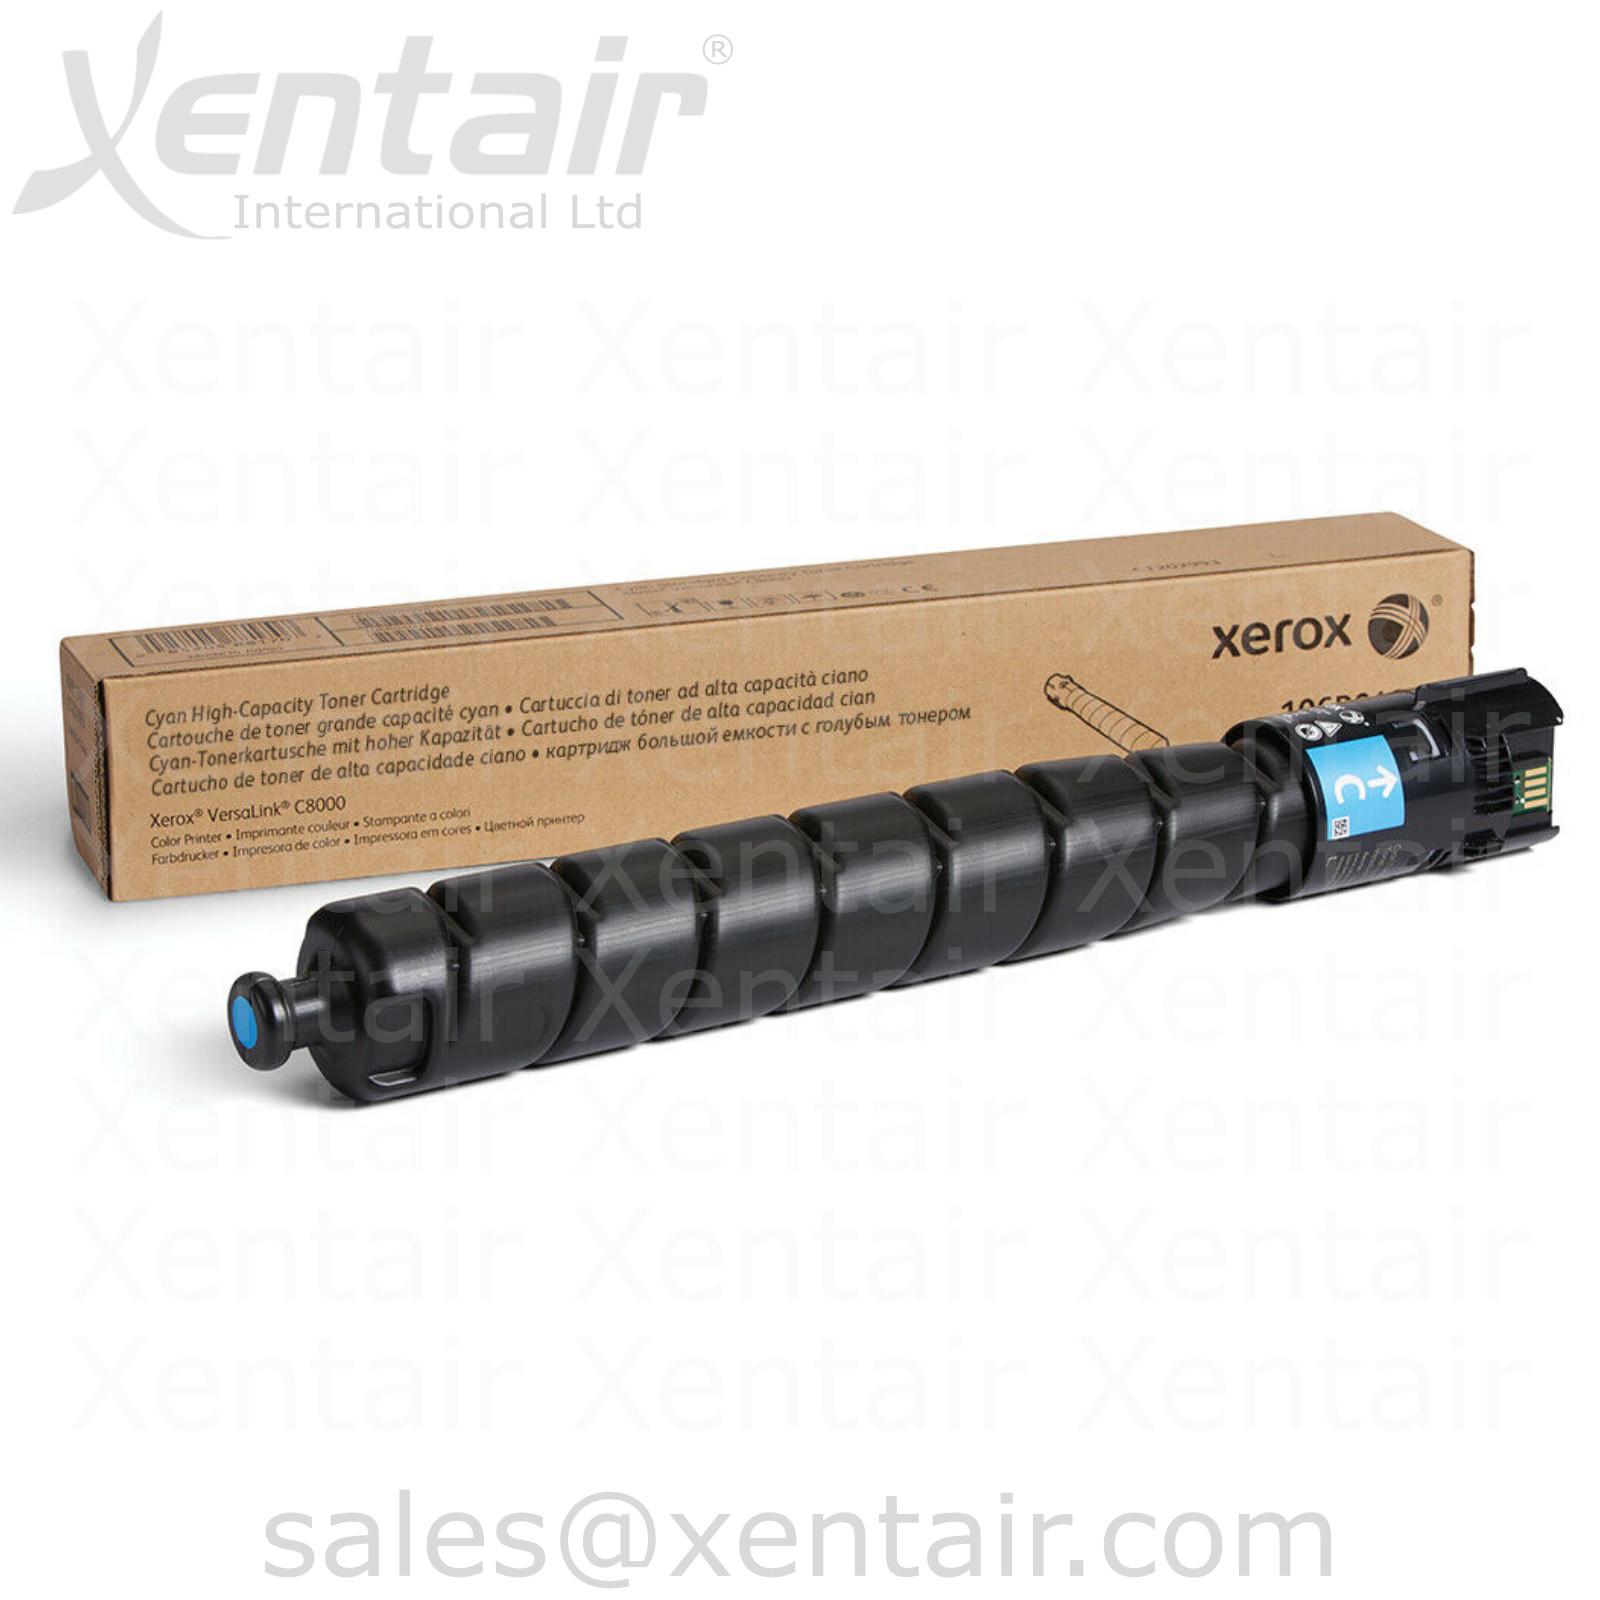 Xerox® VersaLink® C8000 High Capacity Cyan Toner Cartridge 106R04050